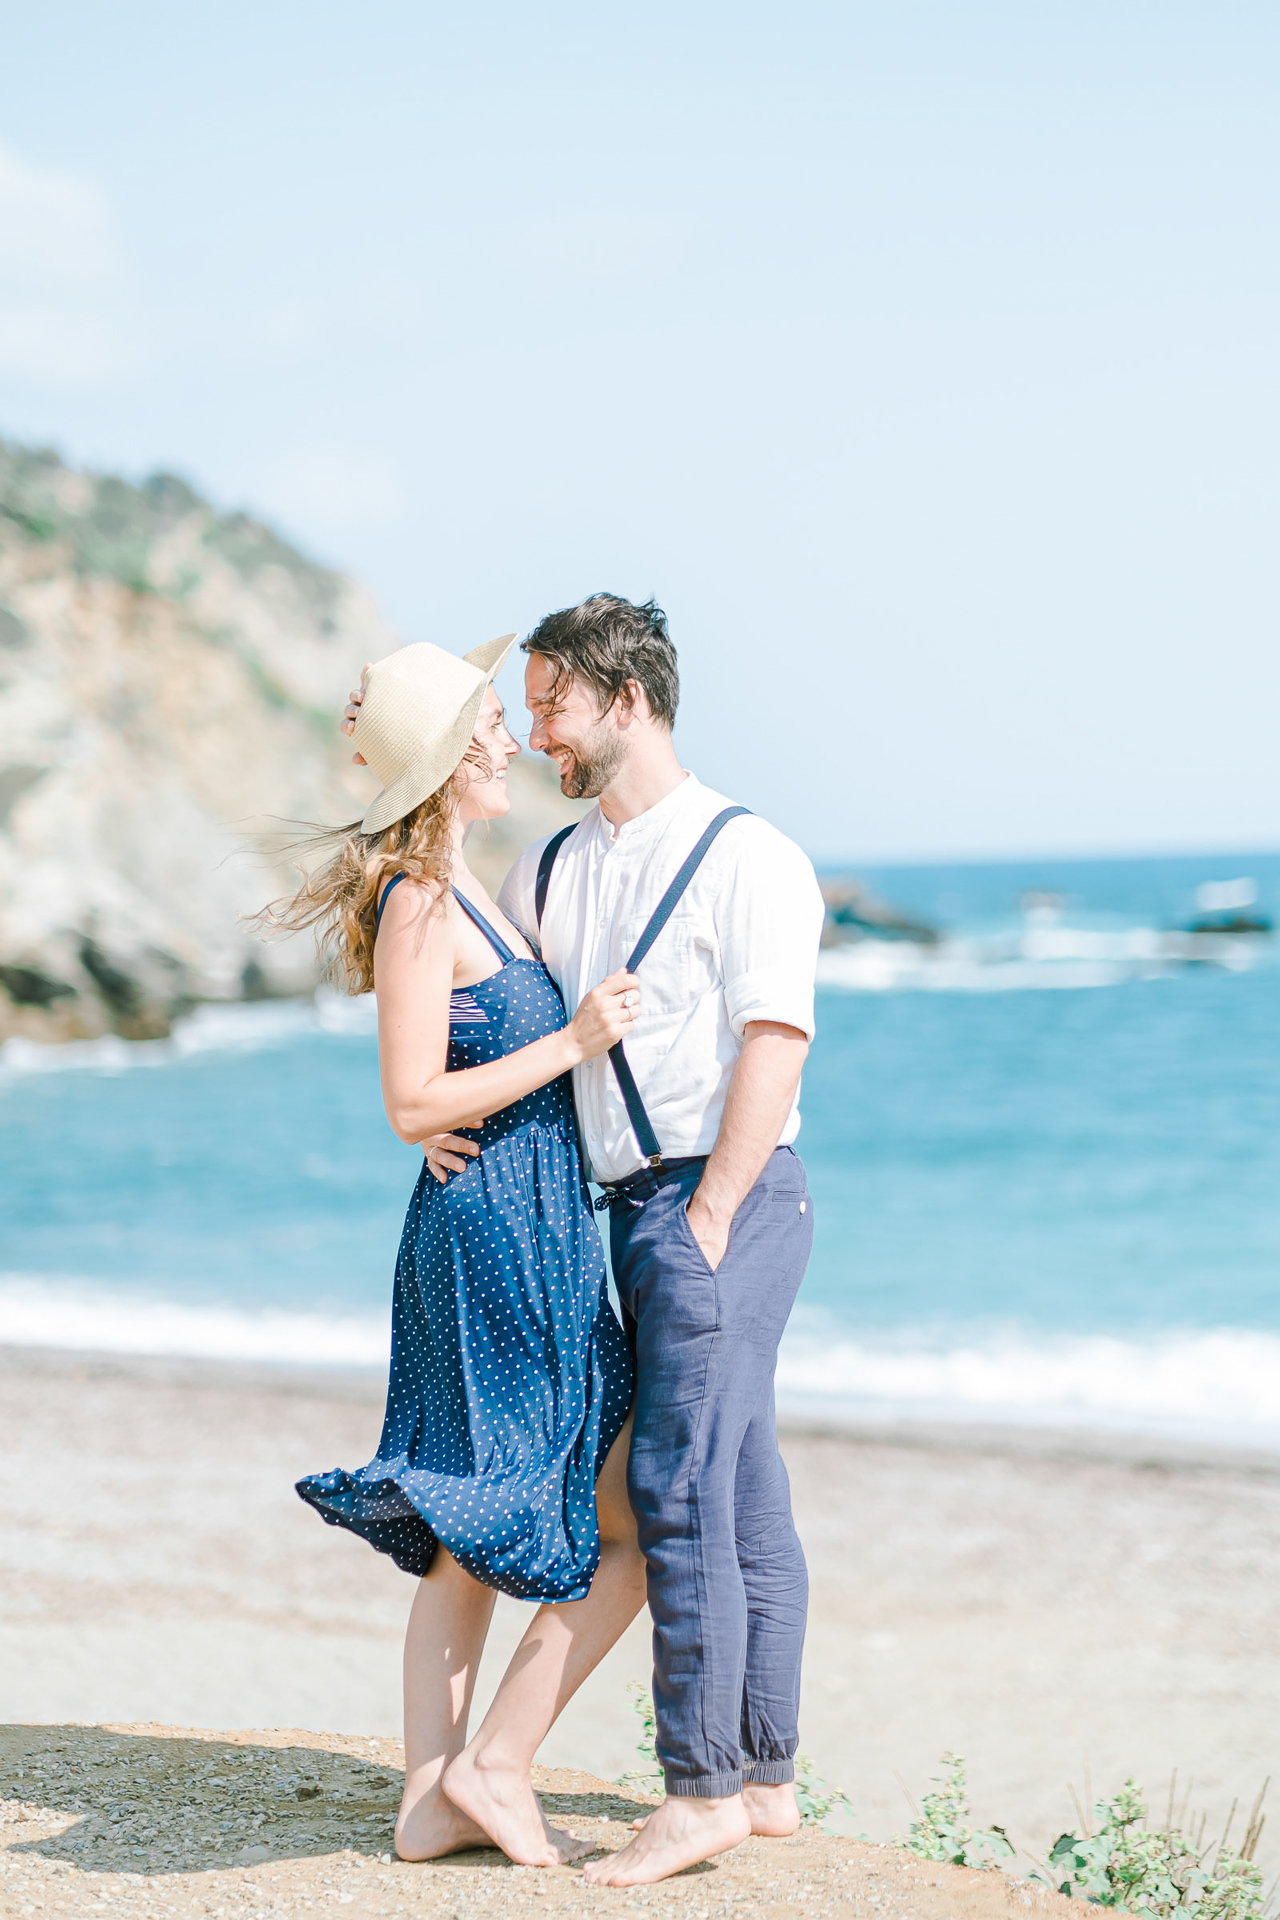 Anniversary couple photoshoot in Skiathos Island, Greece